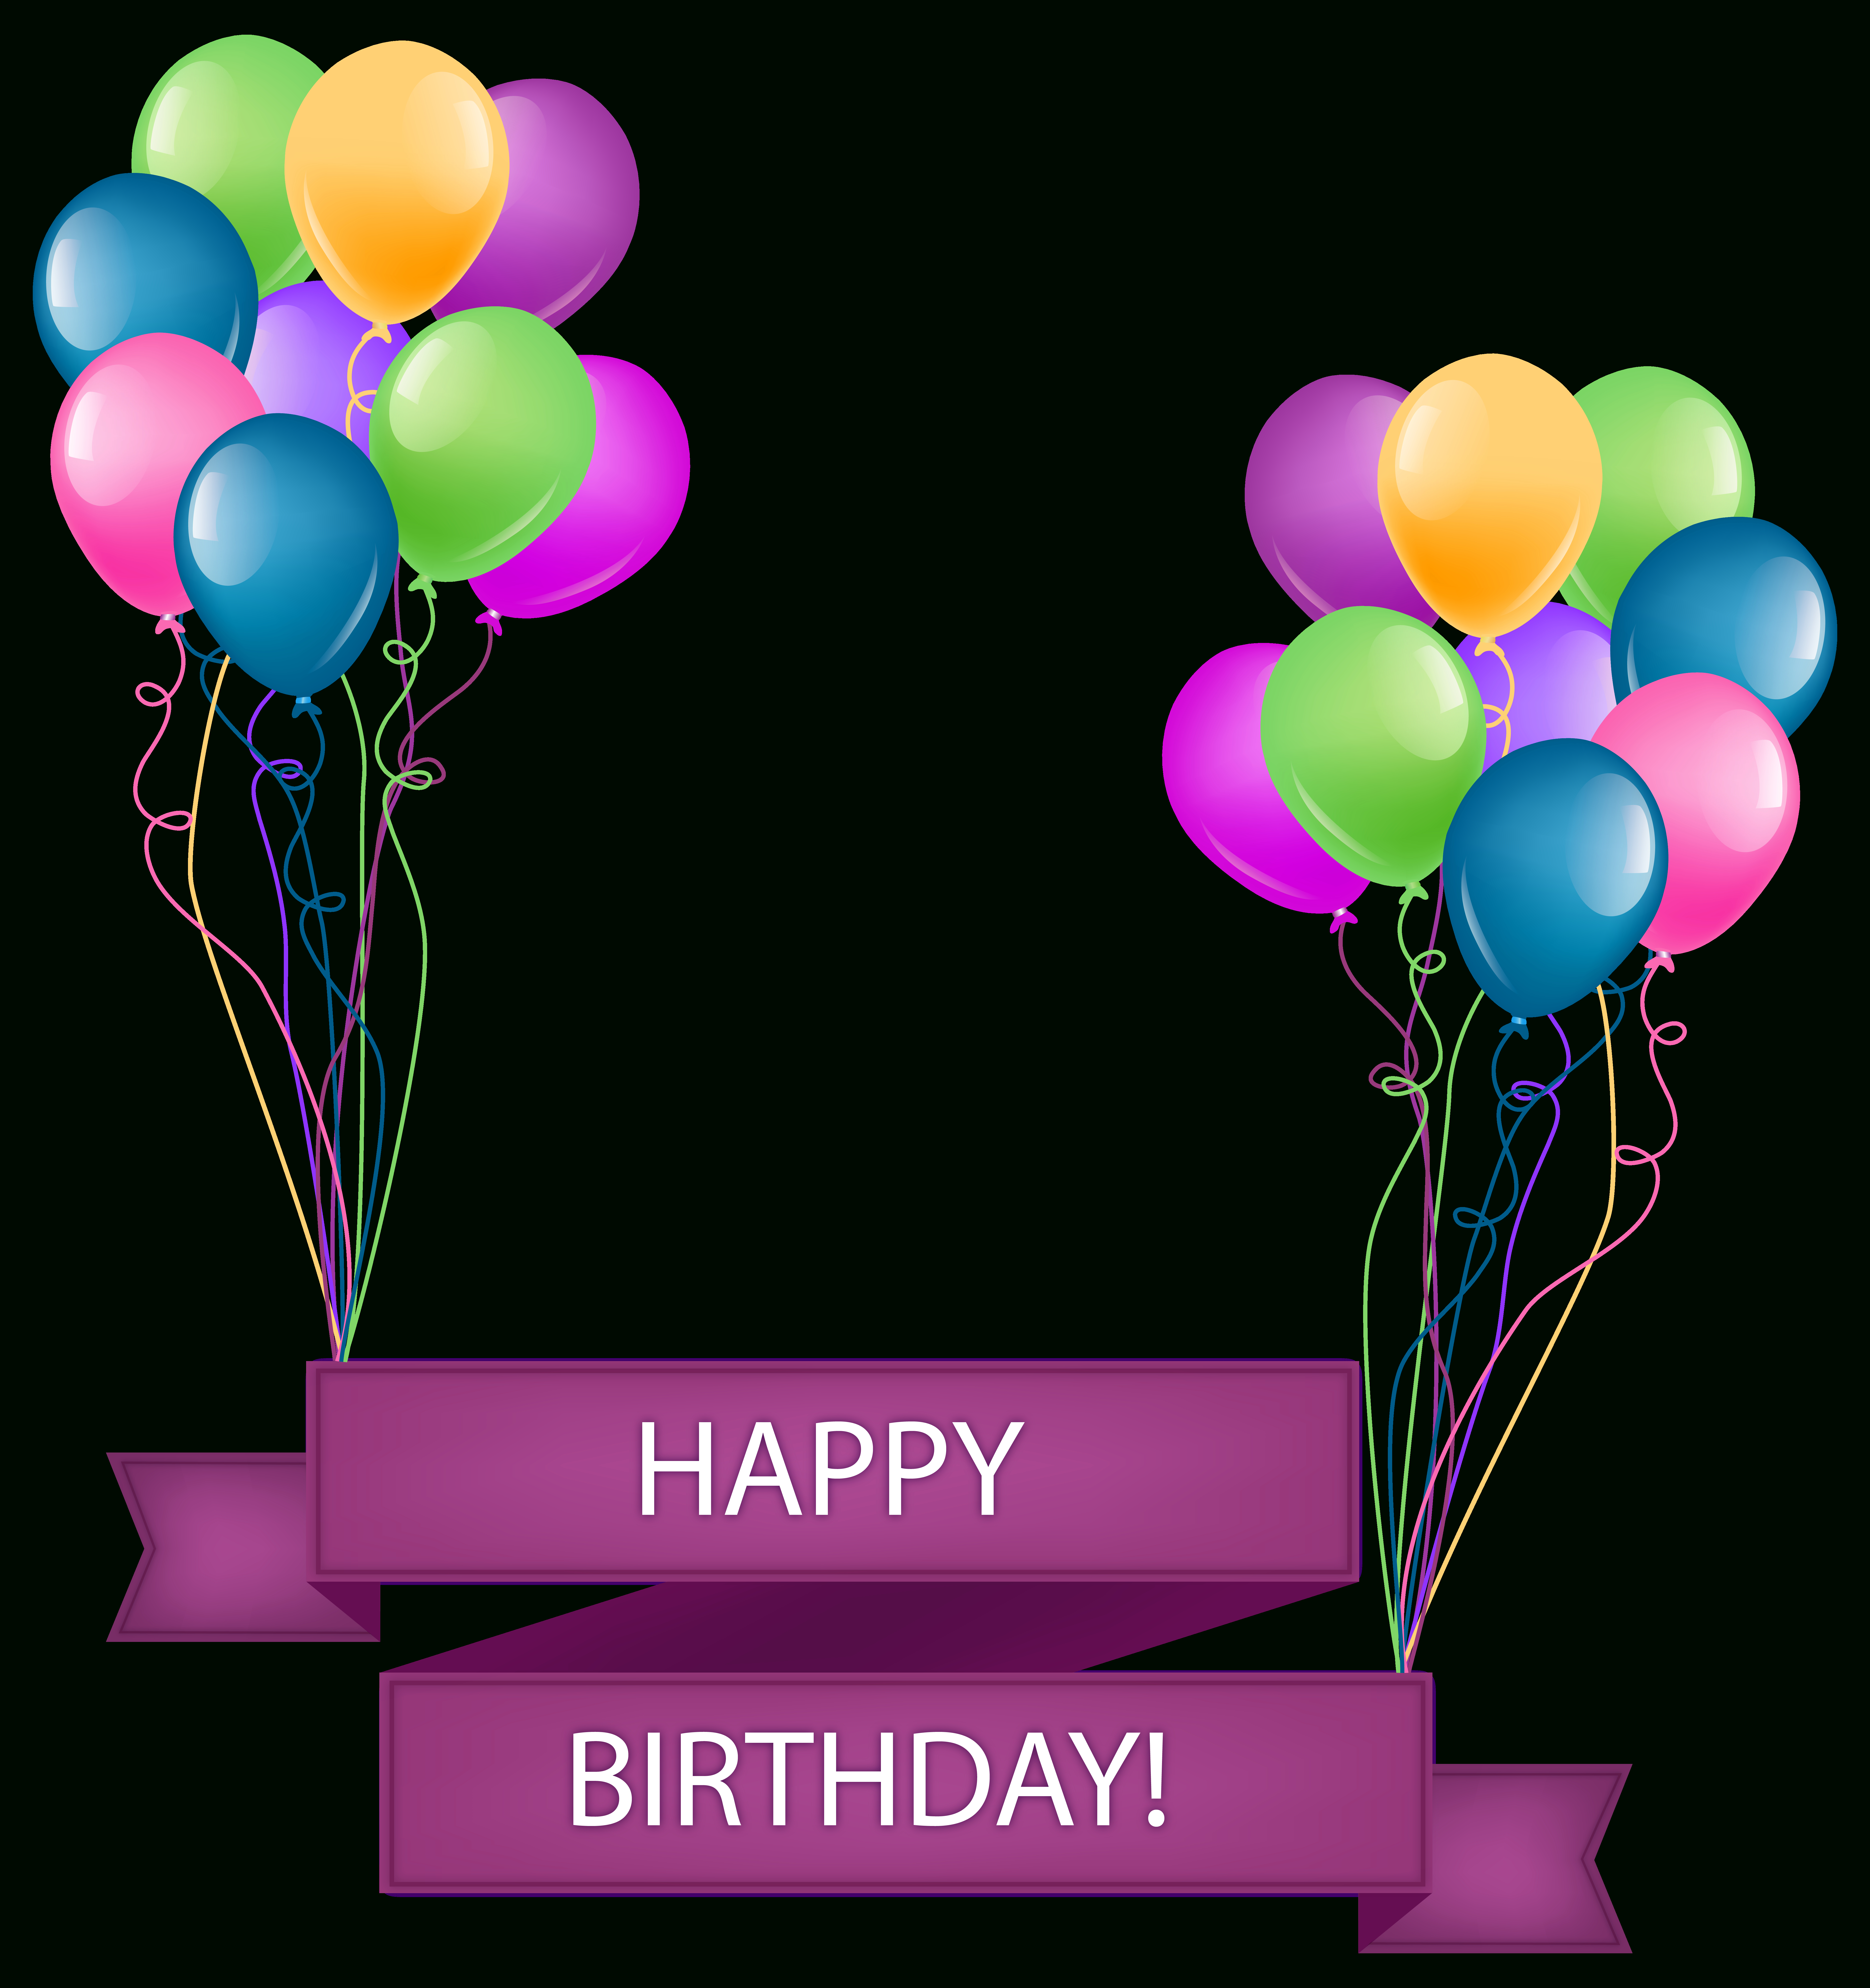 Happy Birthday Banner Designs Free Download – Yeppe With Regard To Free Happy Birthday Banner Templates Download